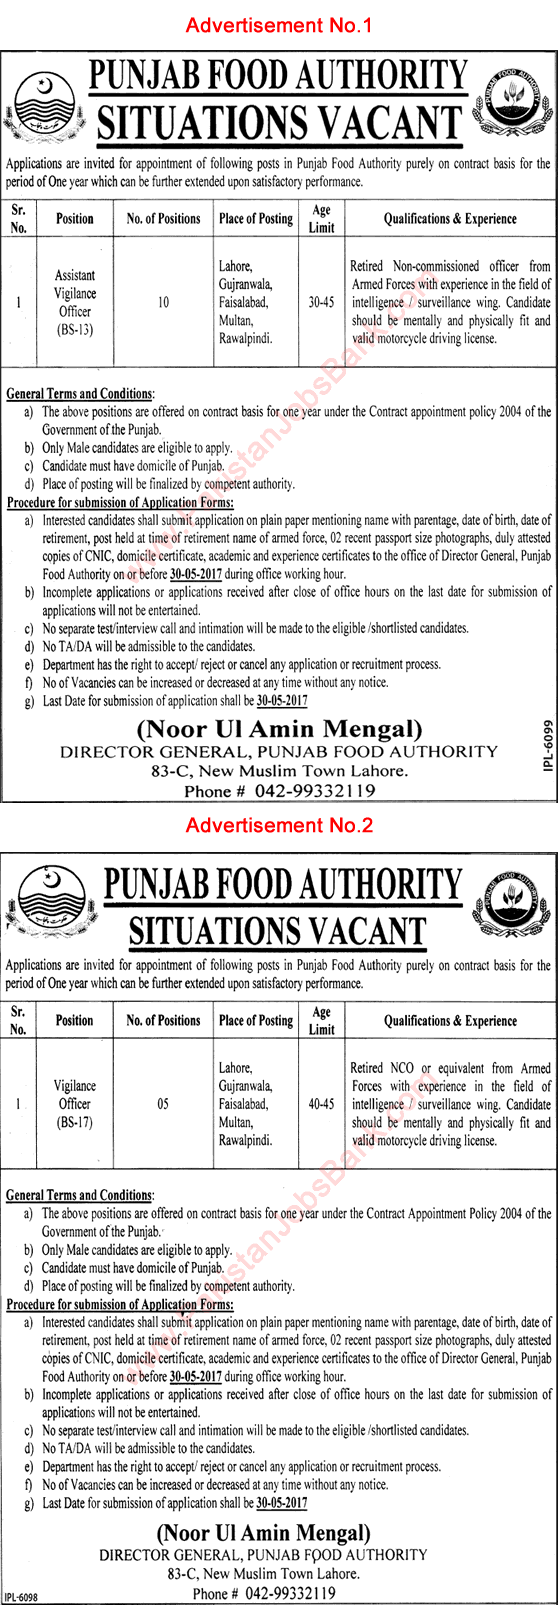 Vigilance Officer Jobs in Punjab Food Authority May 2017 PFA Latest